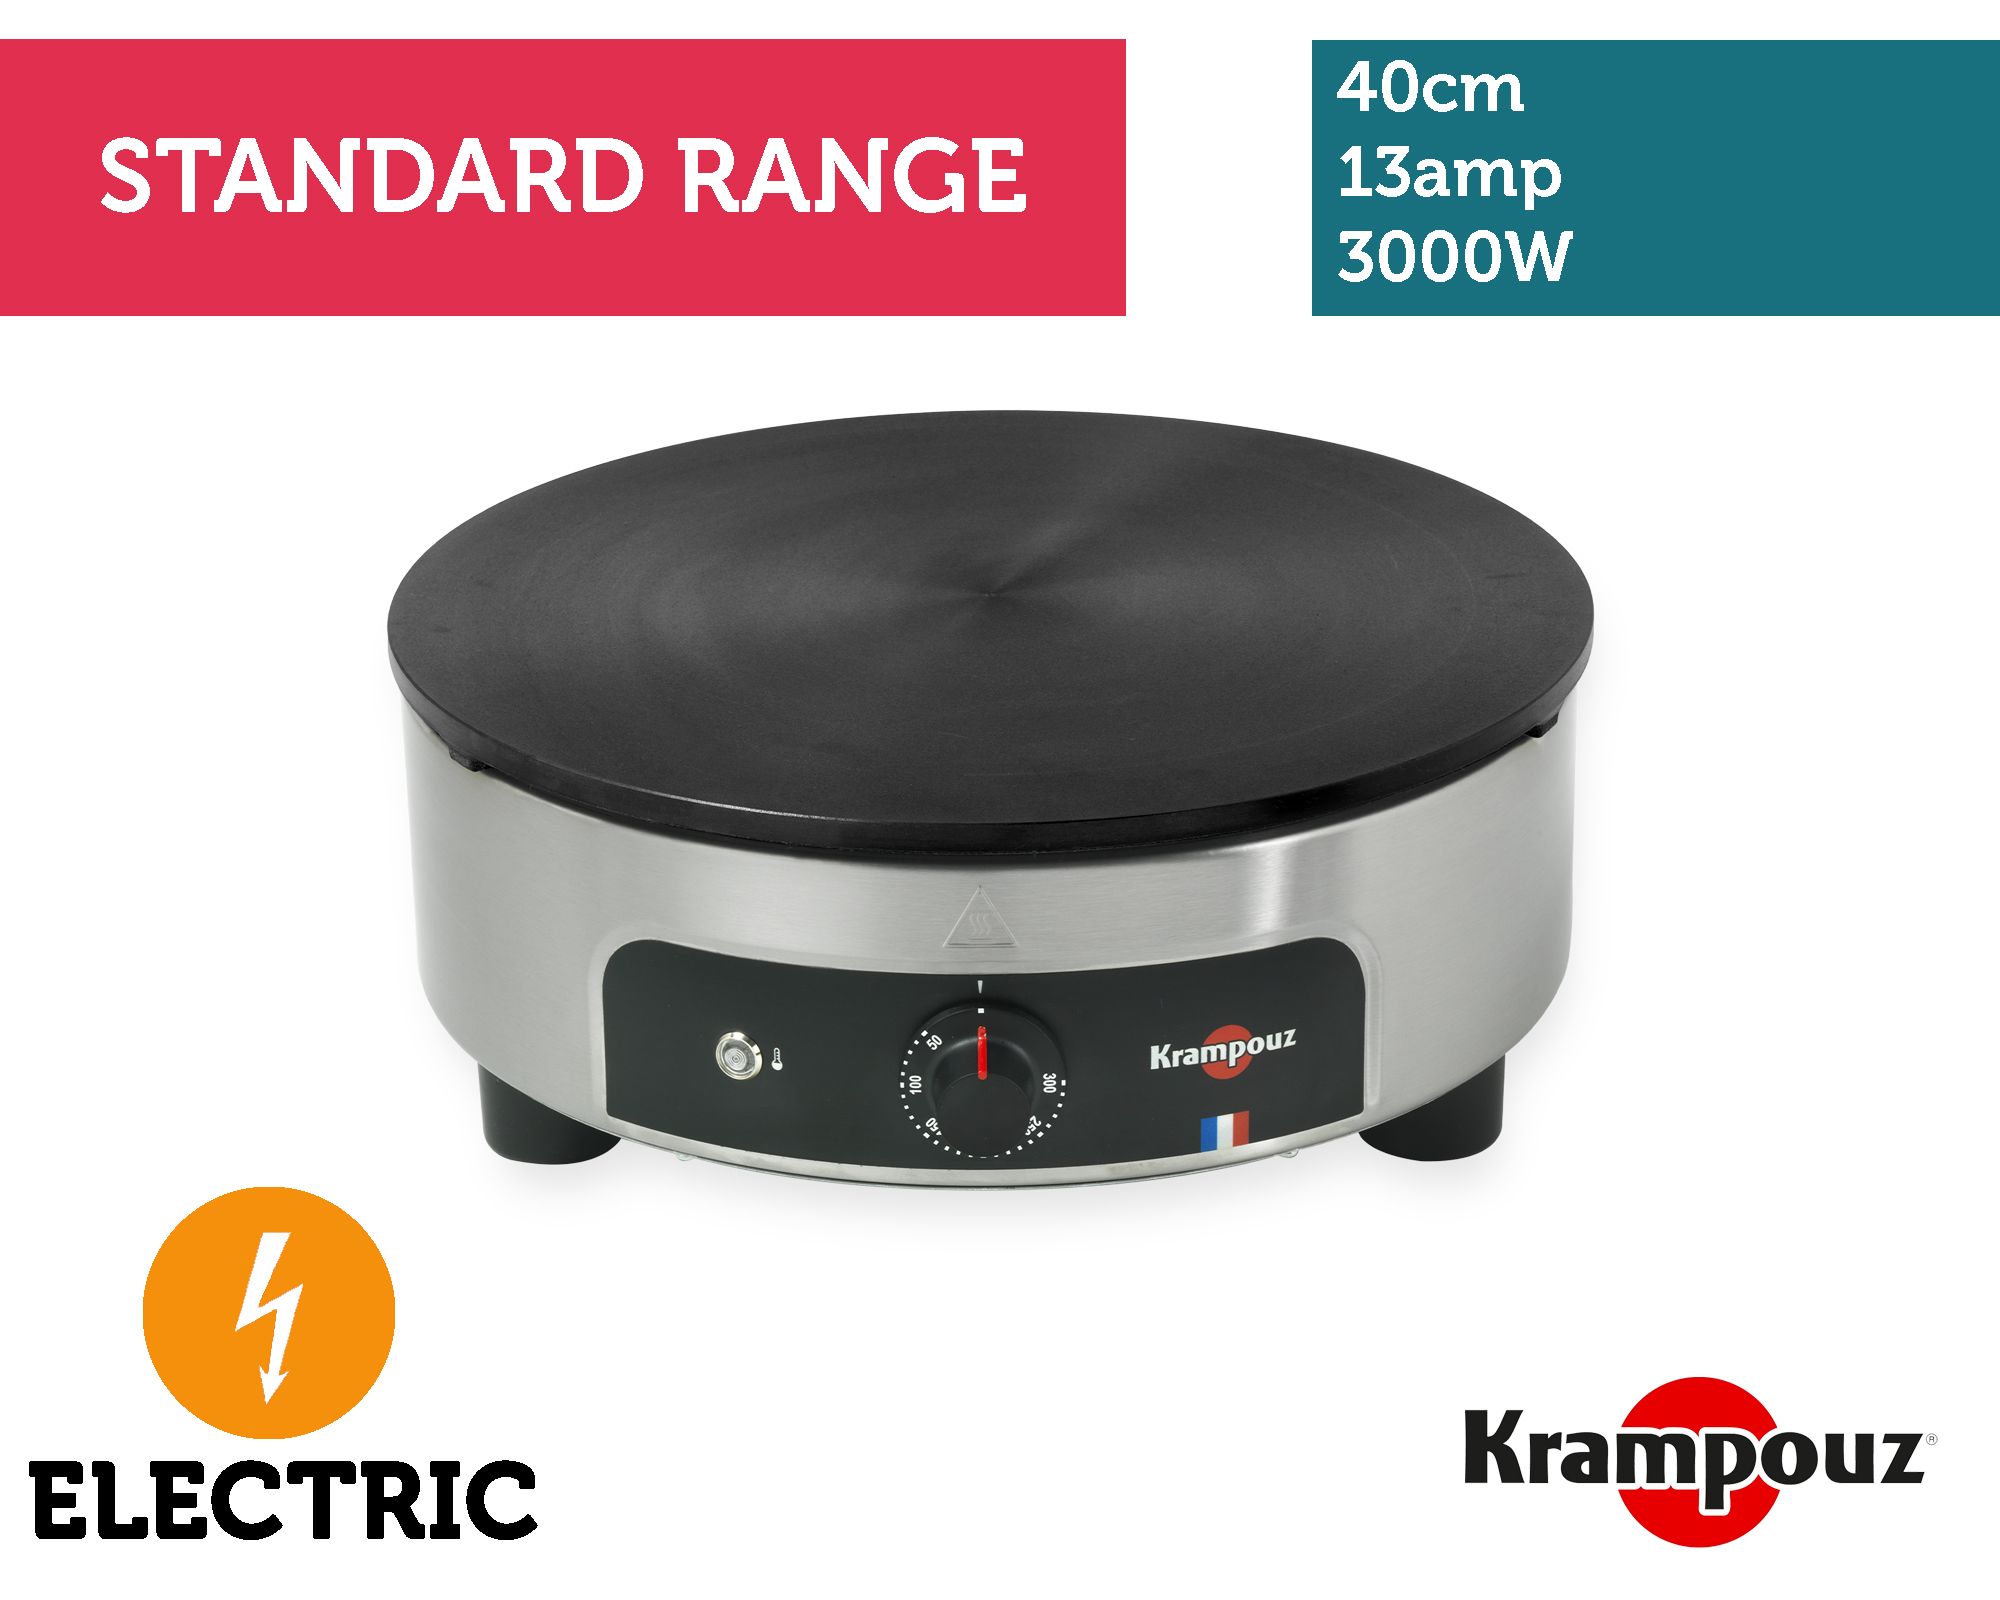 Krampouz 400mm Standard Electric Crepe Make